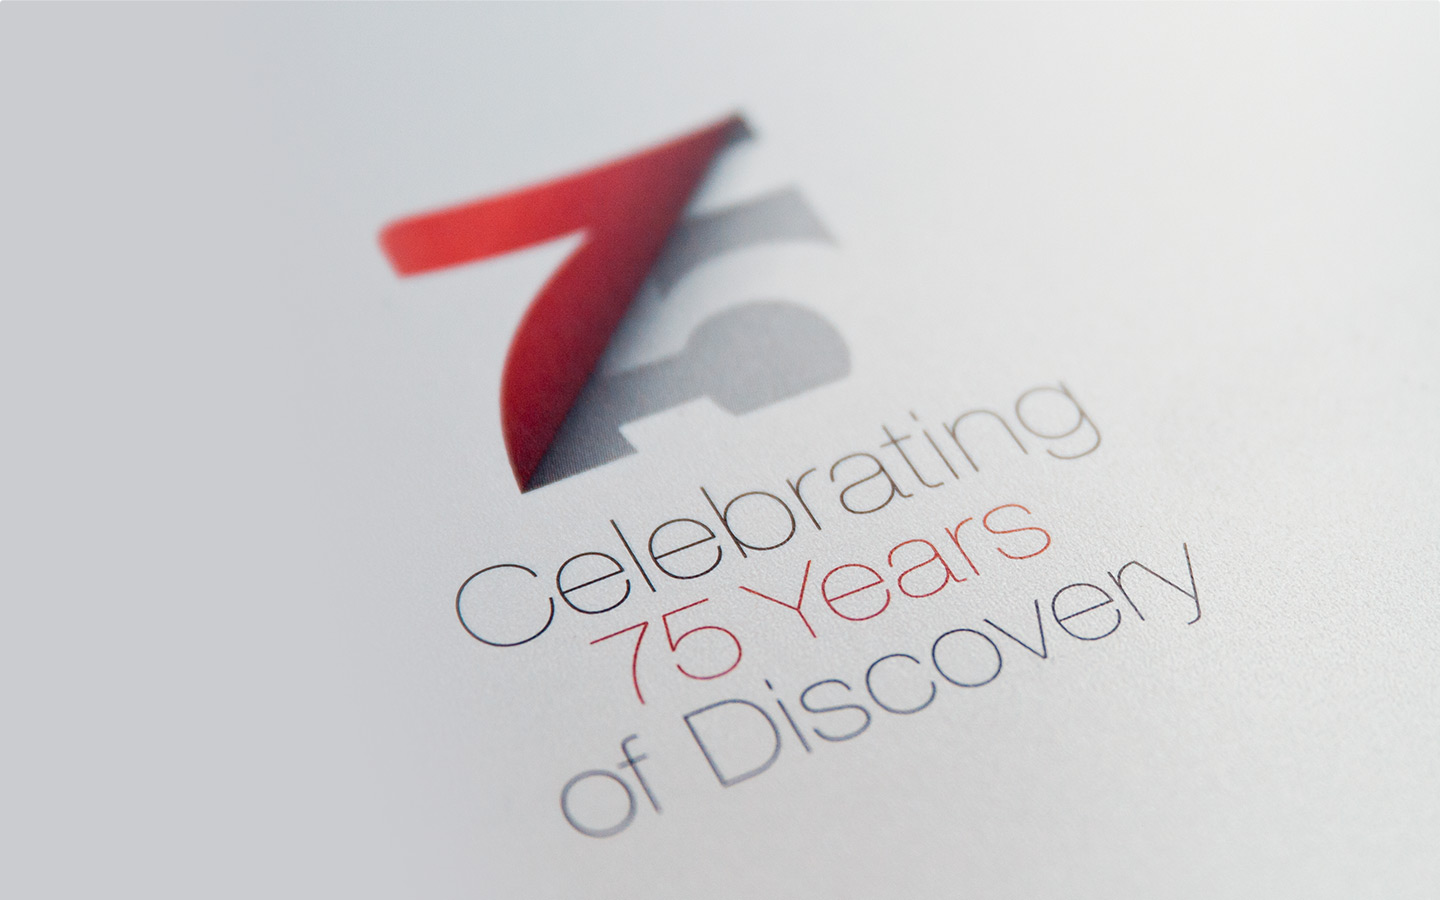 printed version of Avery Dennison's 75th anniversary logo